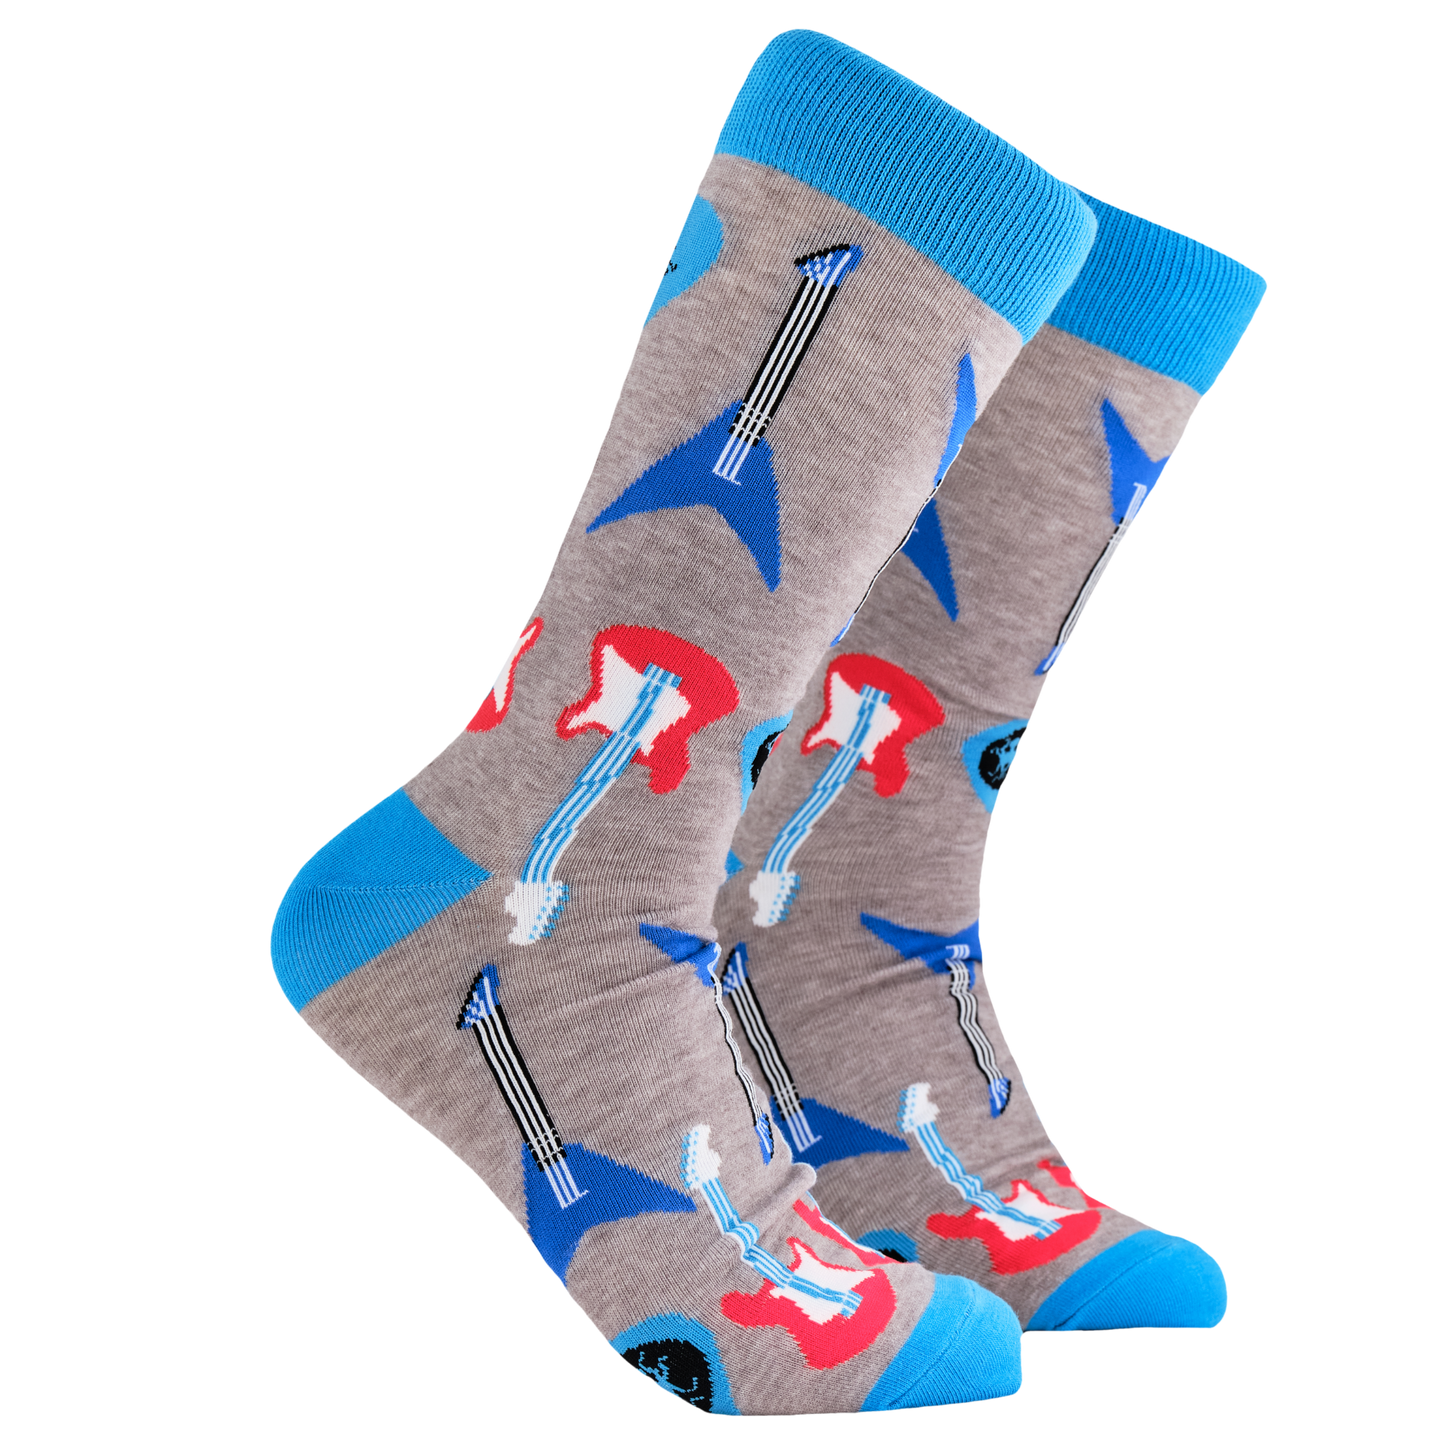 Electric Guitar Socks - Electric Strings. A pair of socks depicting classic rock guitars. Grey legs, blue cuff, heel and toe.